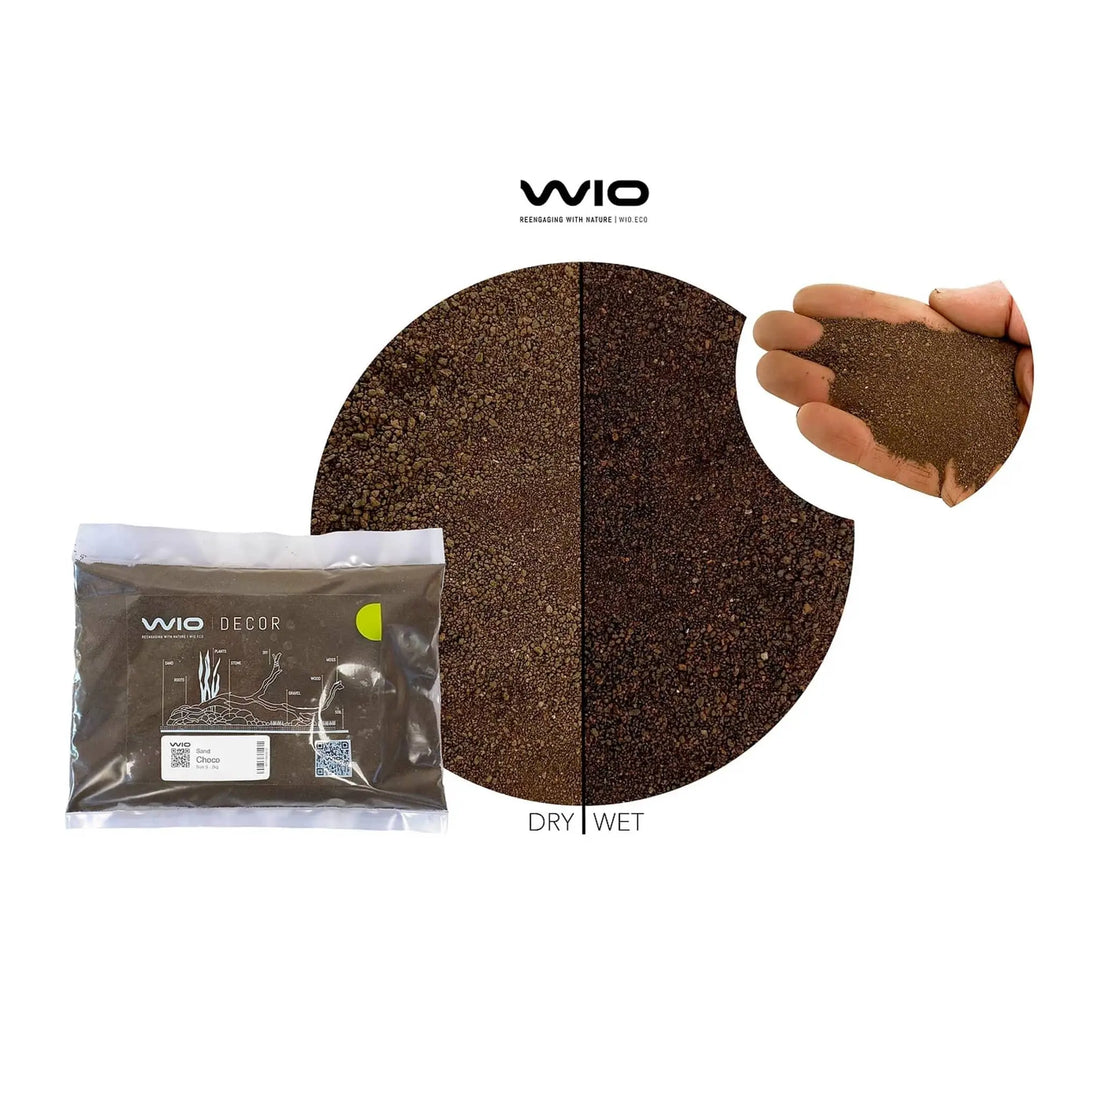 Wio Choco Riverbed Sand - 2kg - Aqua Essentials